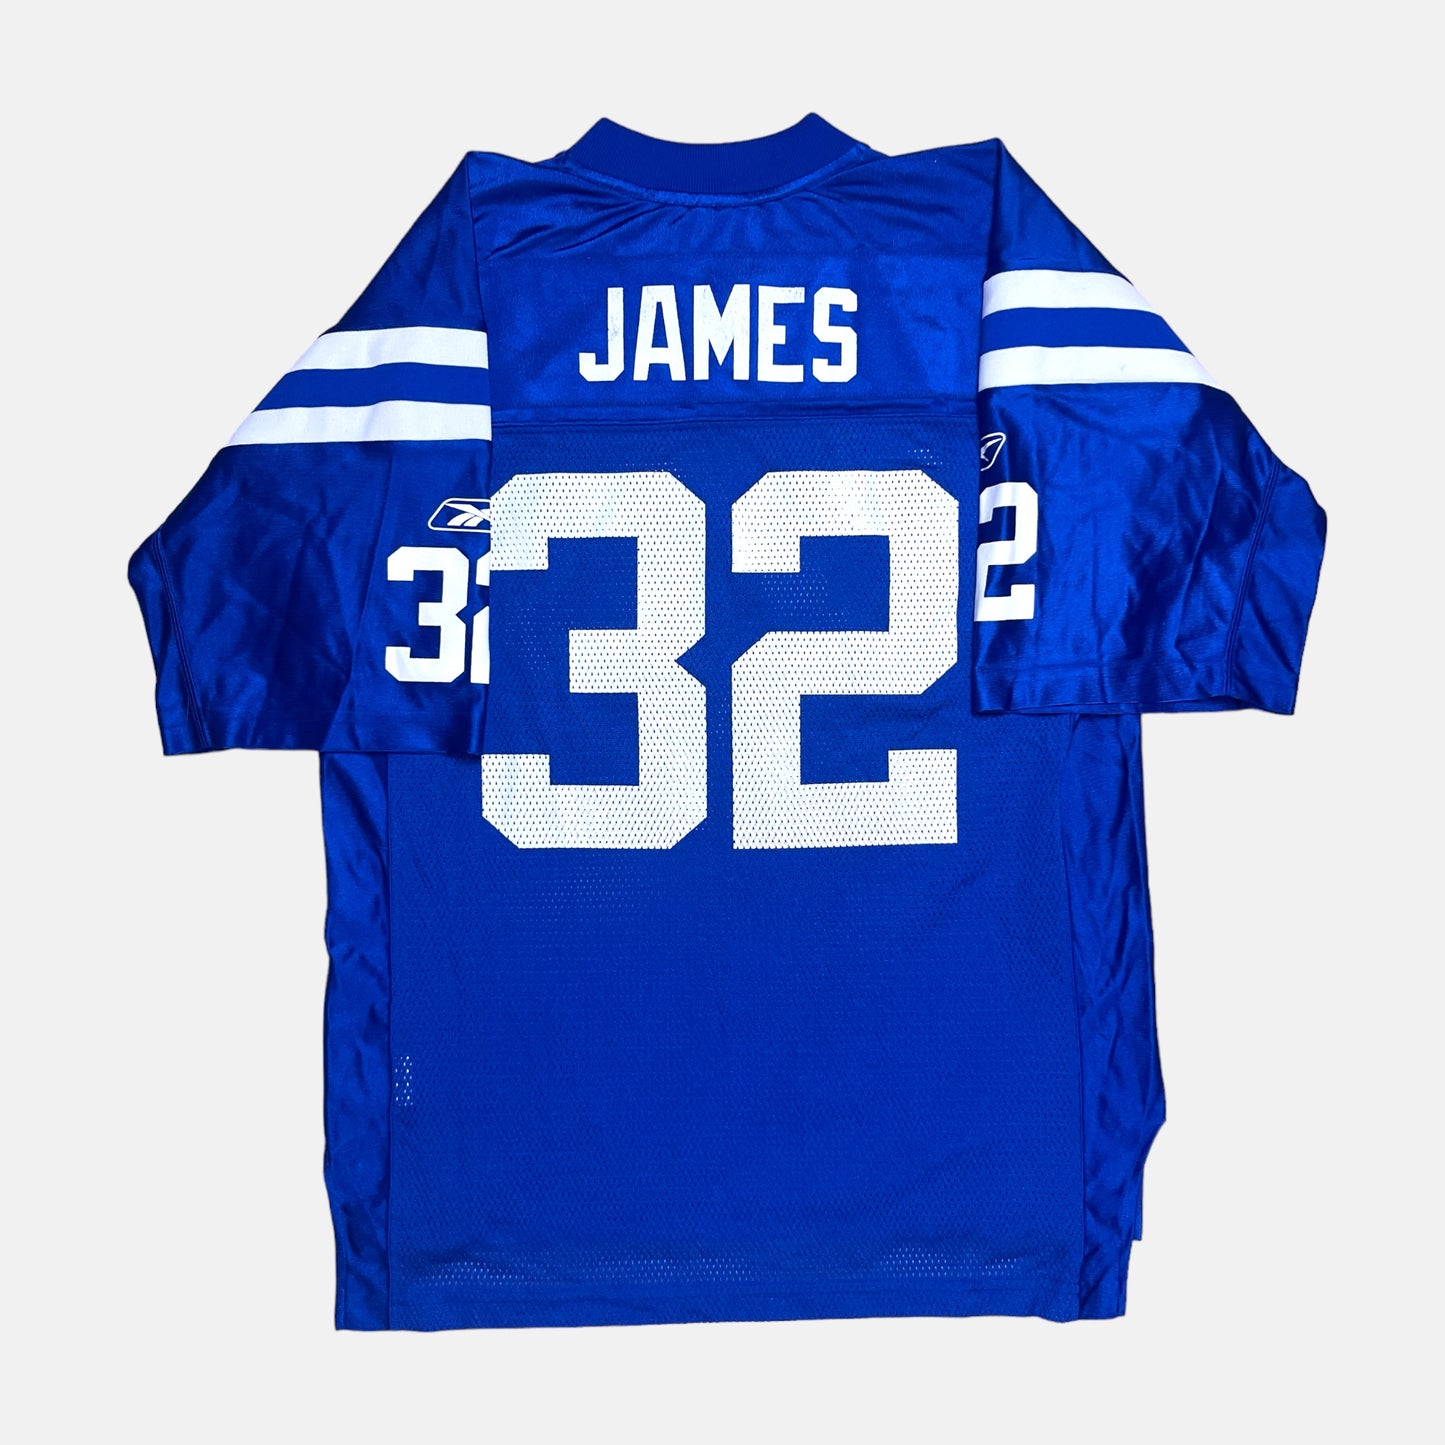 Indianapolis Colts - Edgerrin James - Größe M - Reebok - NFL Trikot